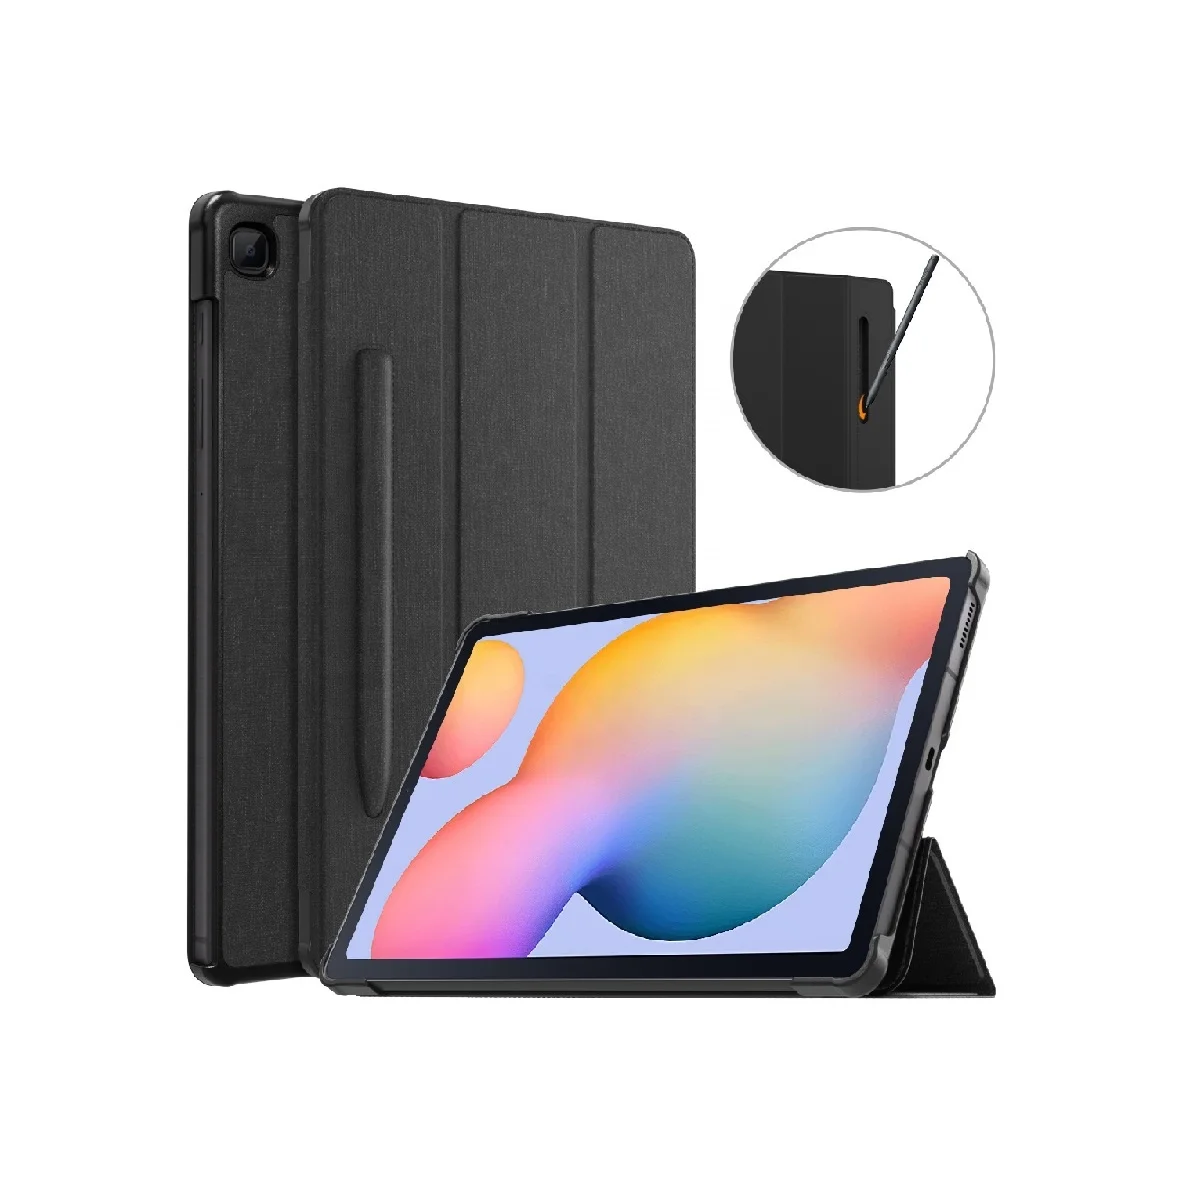 

MoKo Tri-Fold PU Smart Flip Tablet Case for Samsung Galaxy Tab S6 Lite 10.4 SM-P610/P615 2020